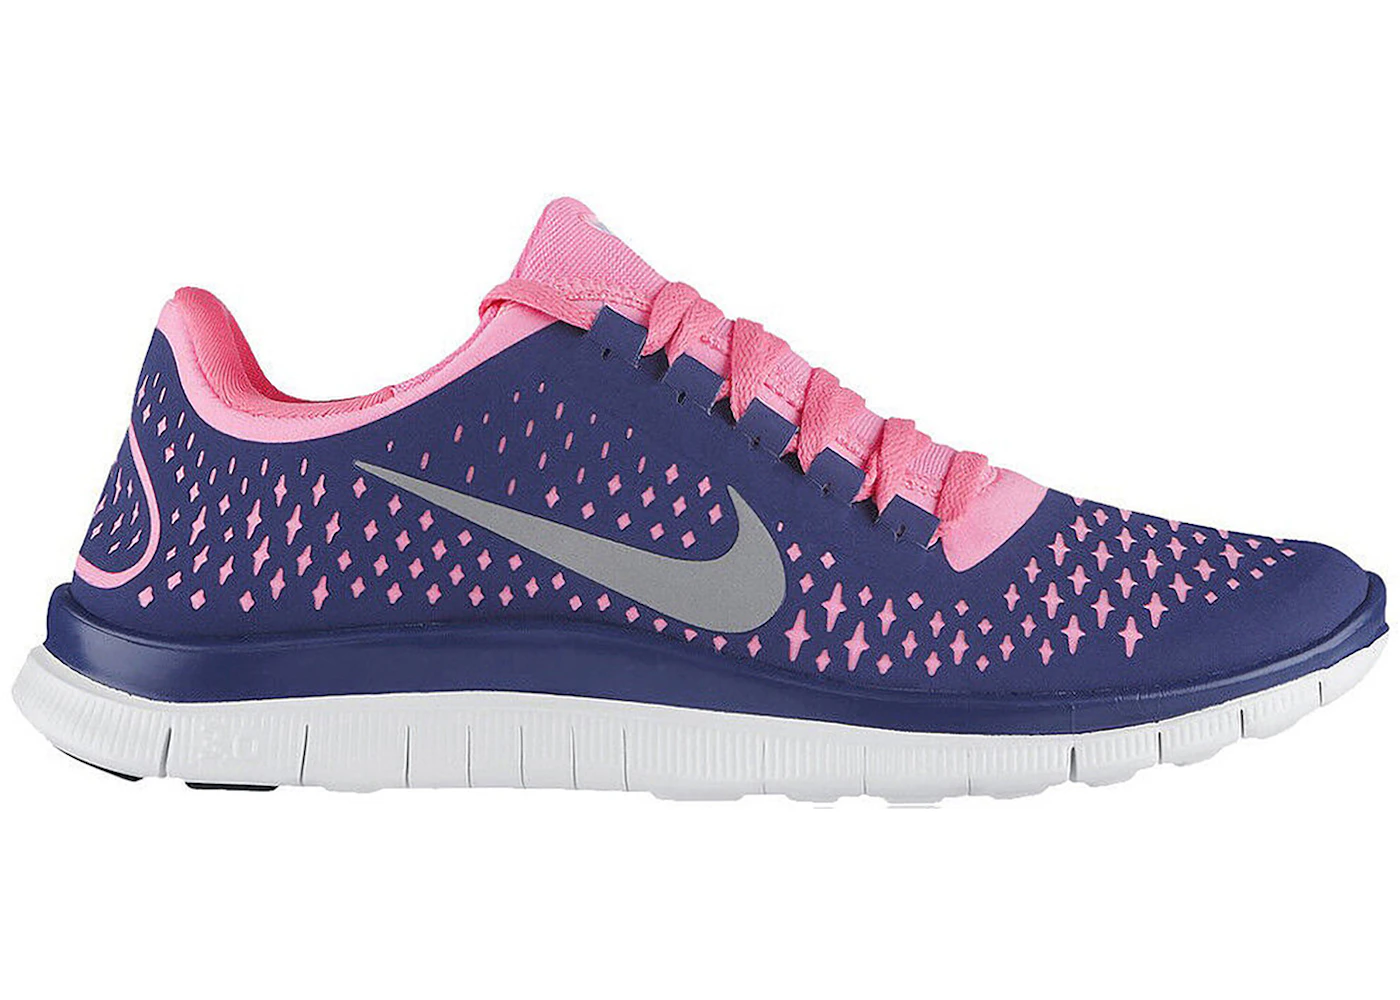 Nike Free Run 3.0 V4 Deep Royal Blue Pink (Women's) - 511495-406 - IT